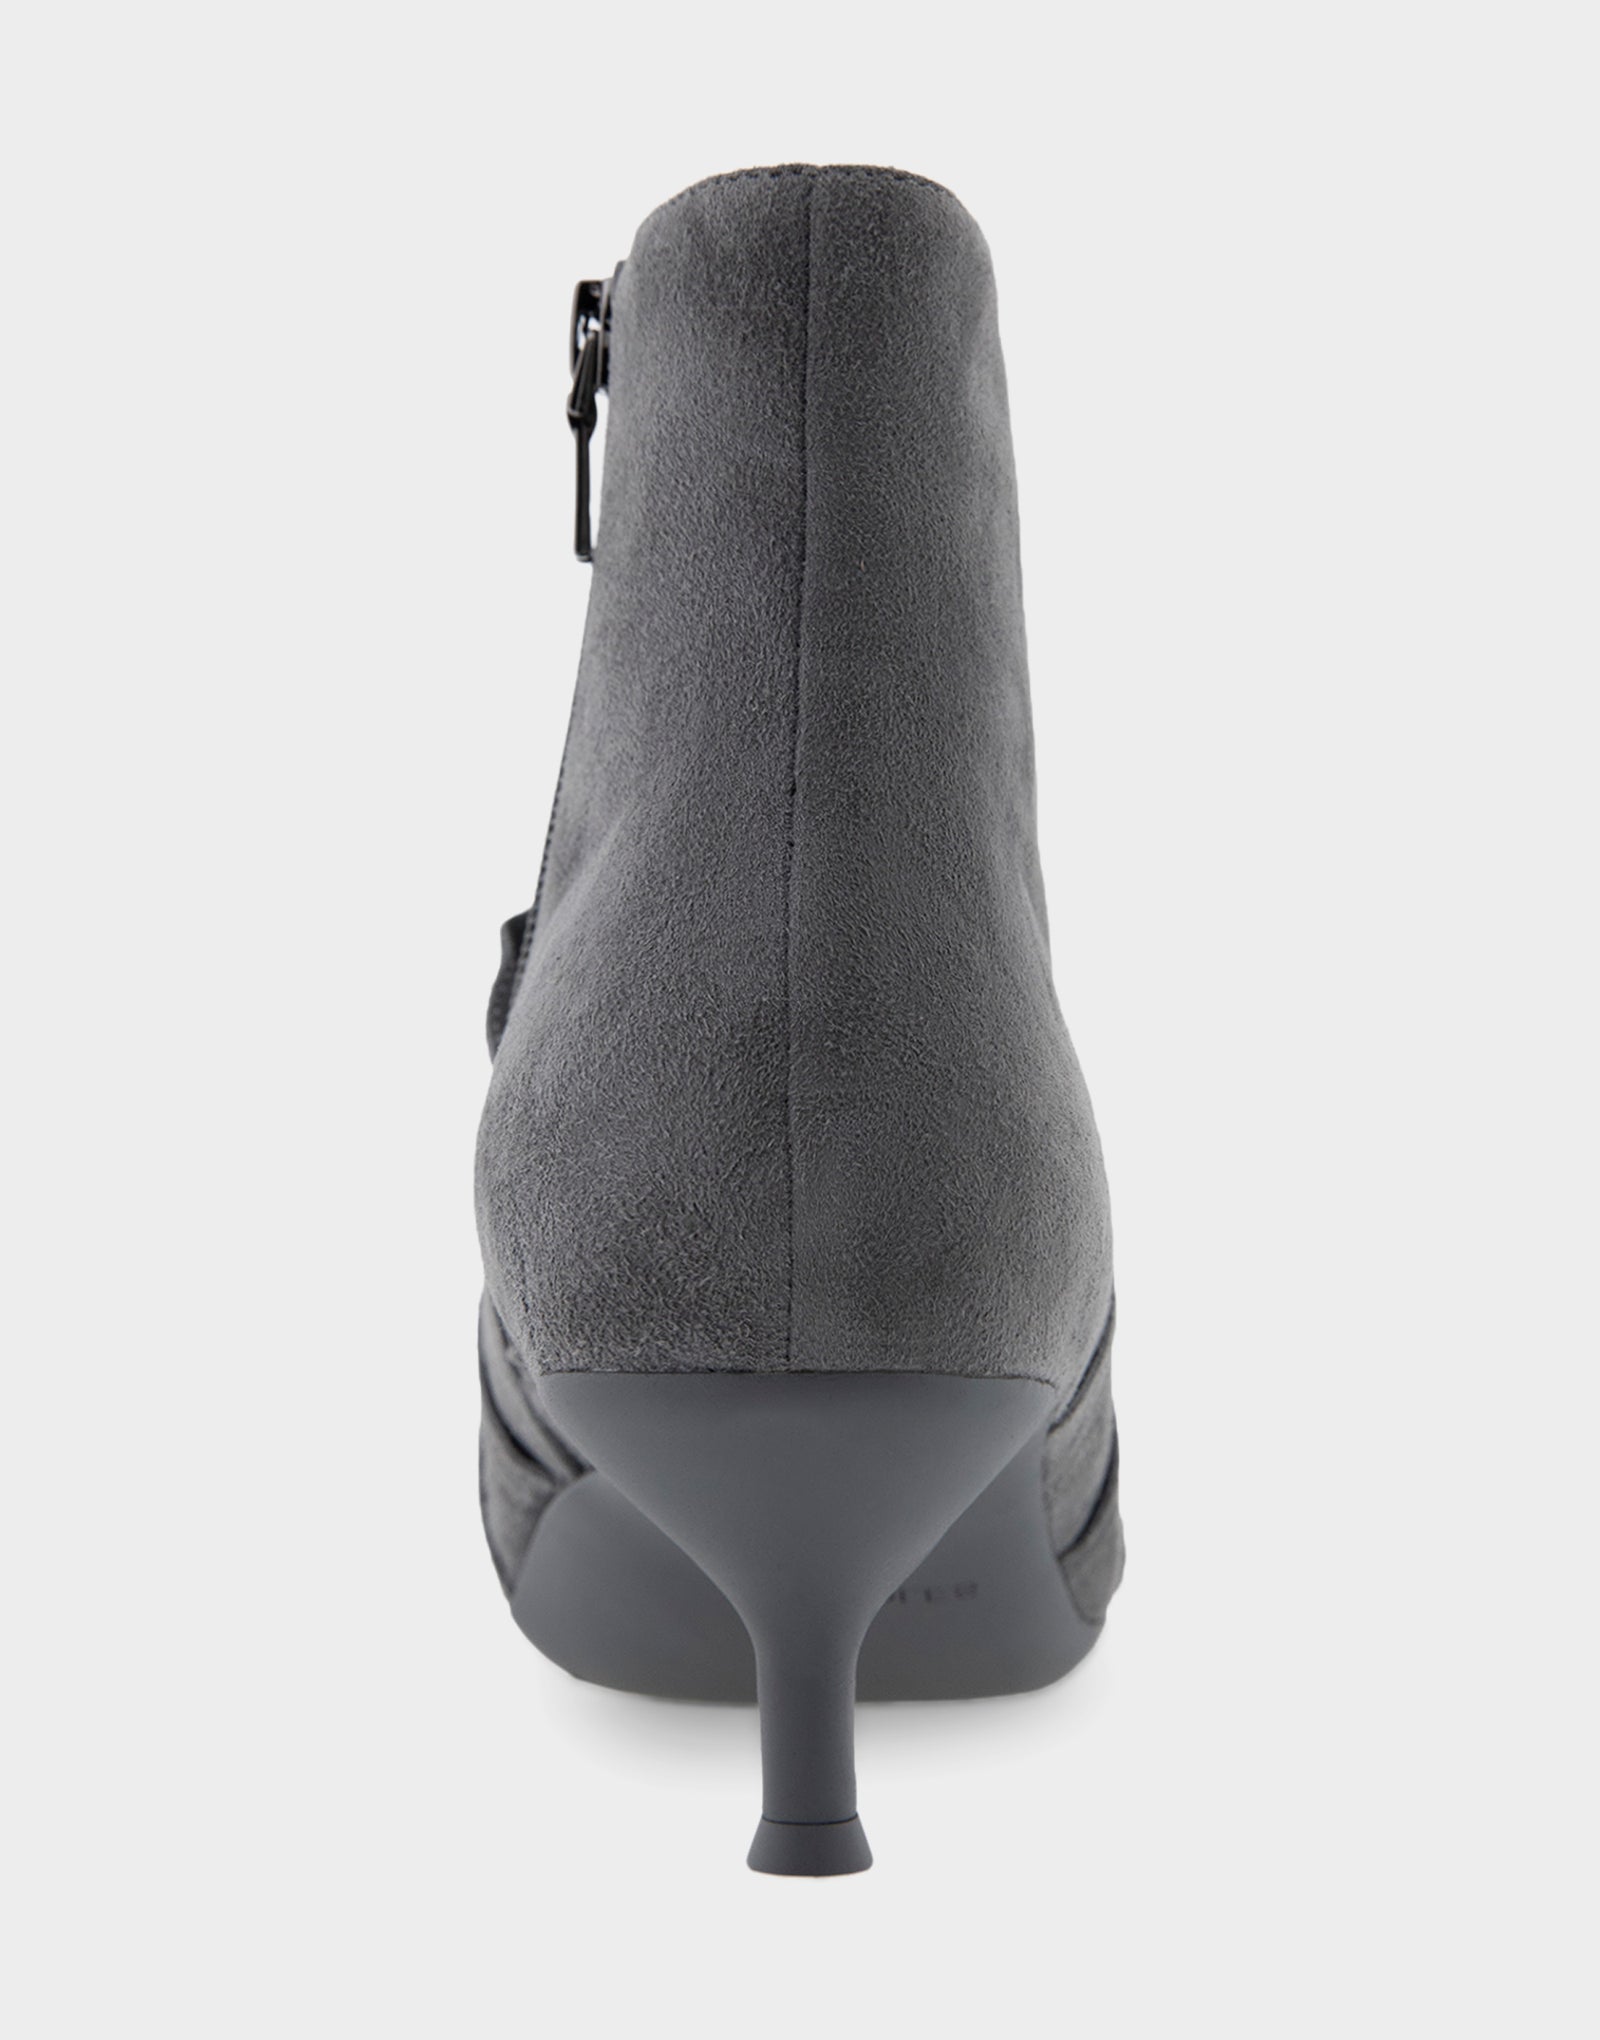 Women's Kitten Heel Ankle Boot in Dark Grey